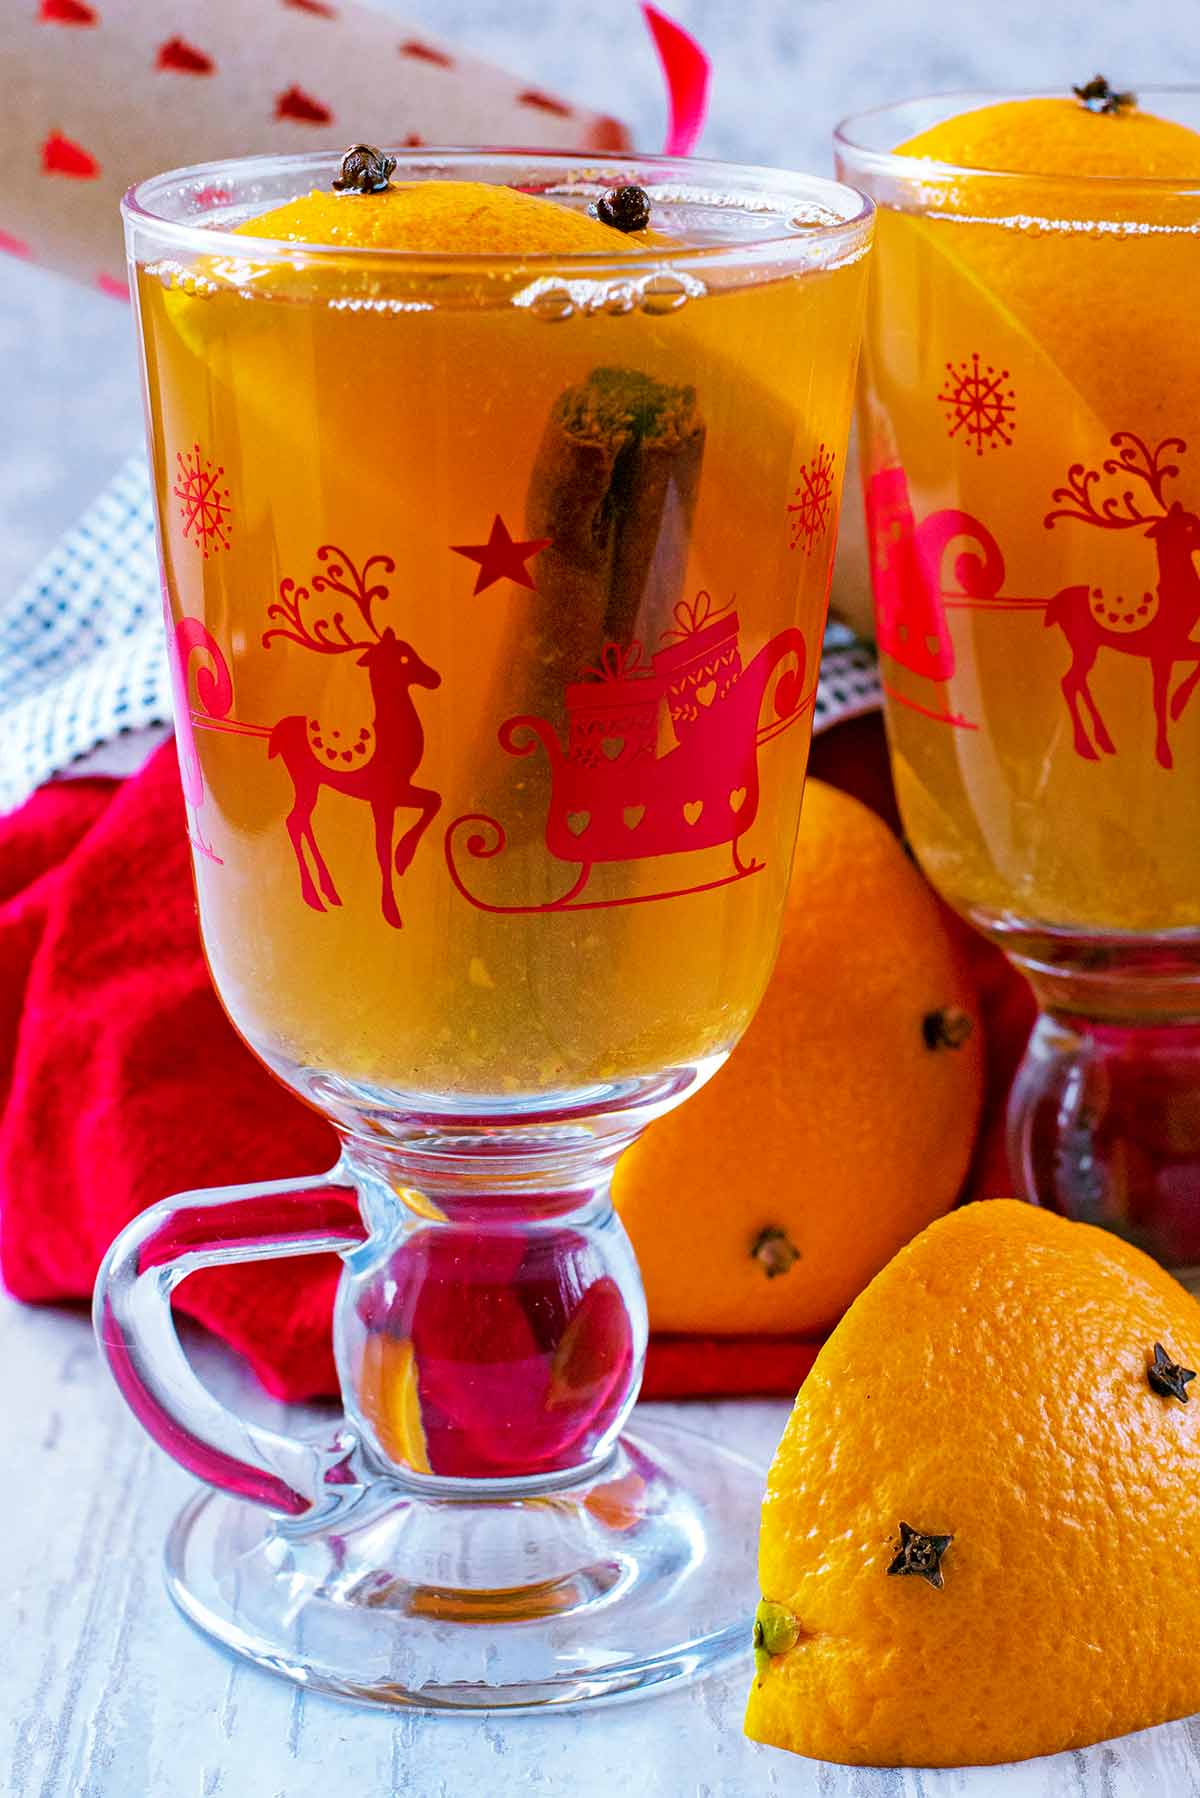 A cinnamon stick and orange segment in juice in a Christmas glass.